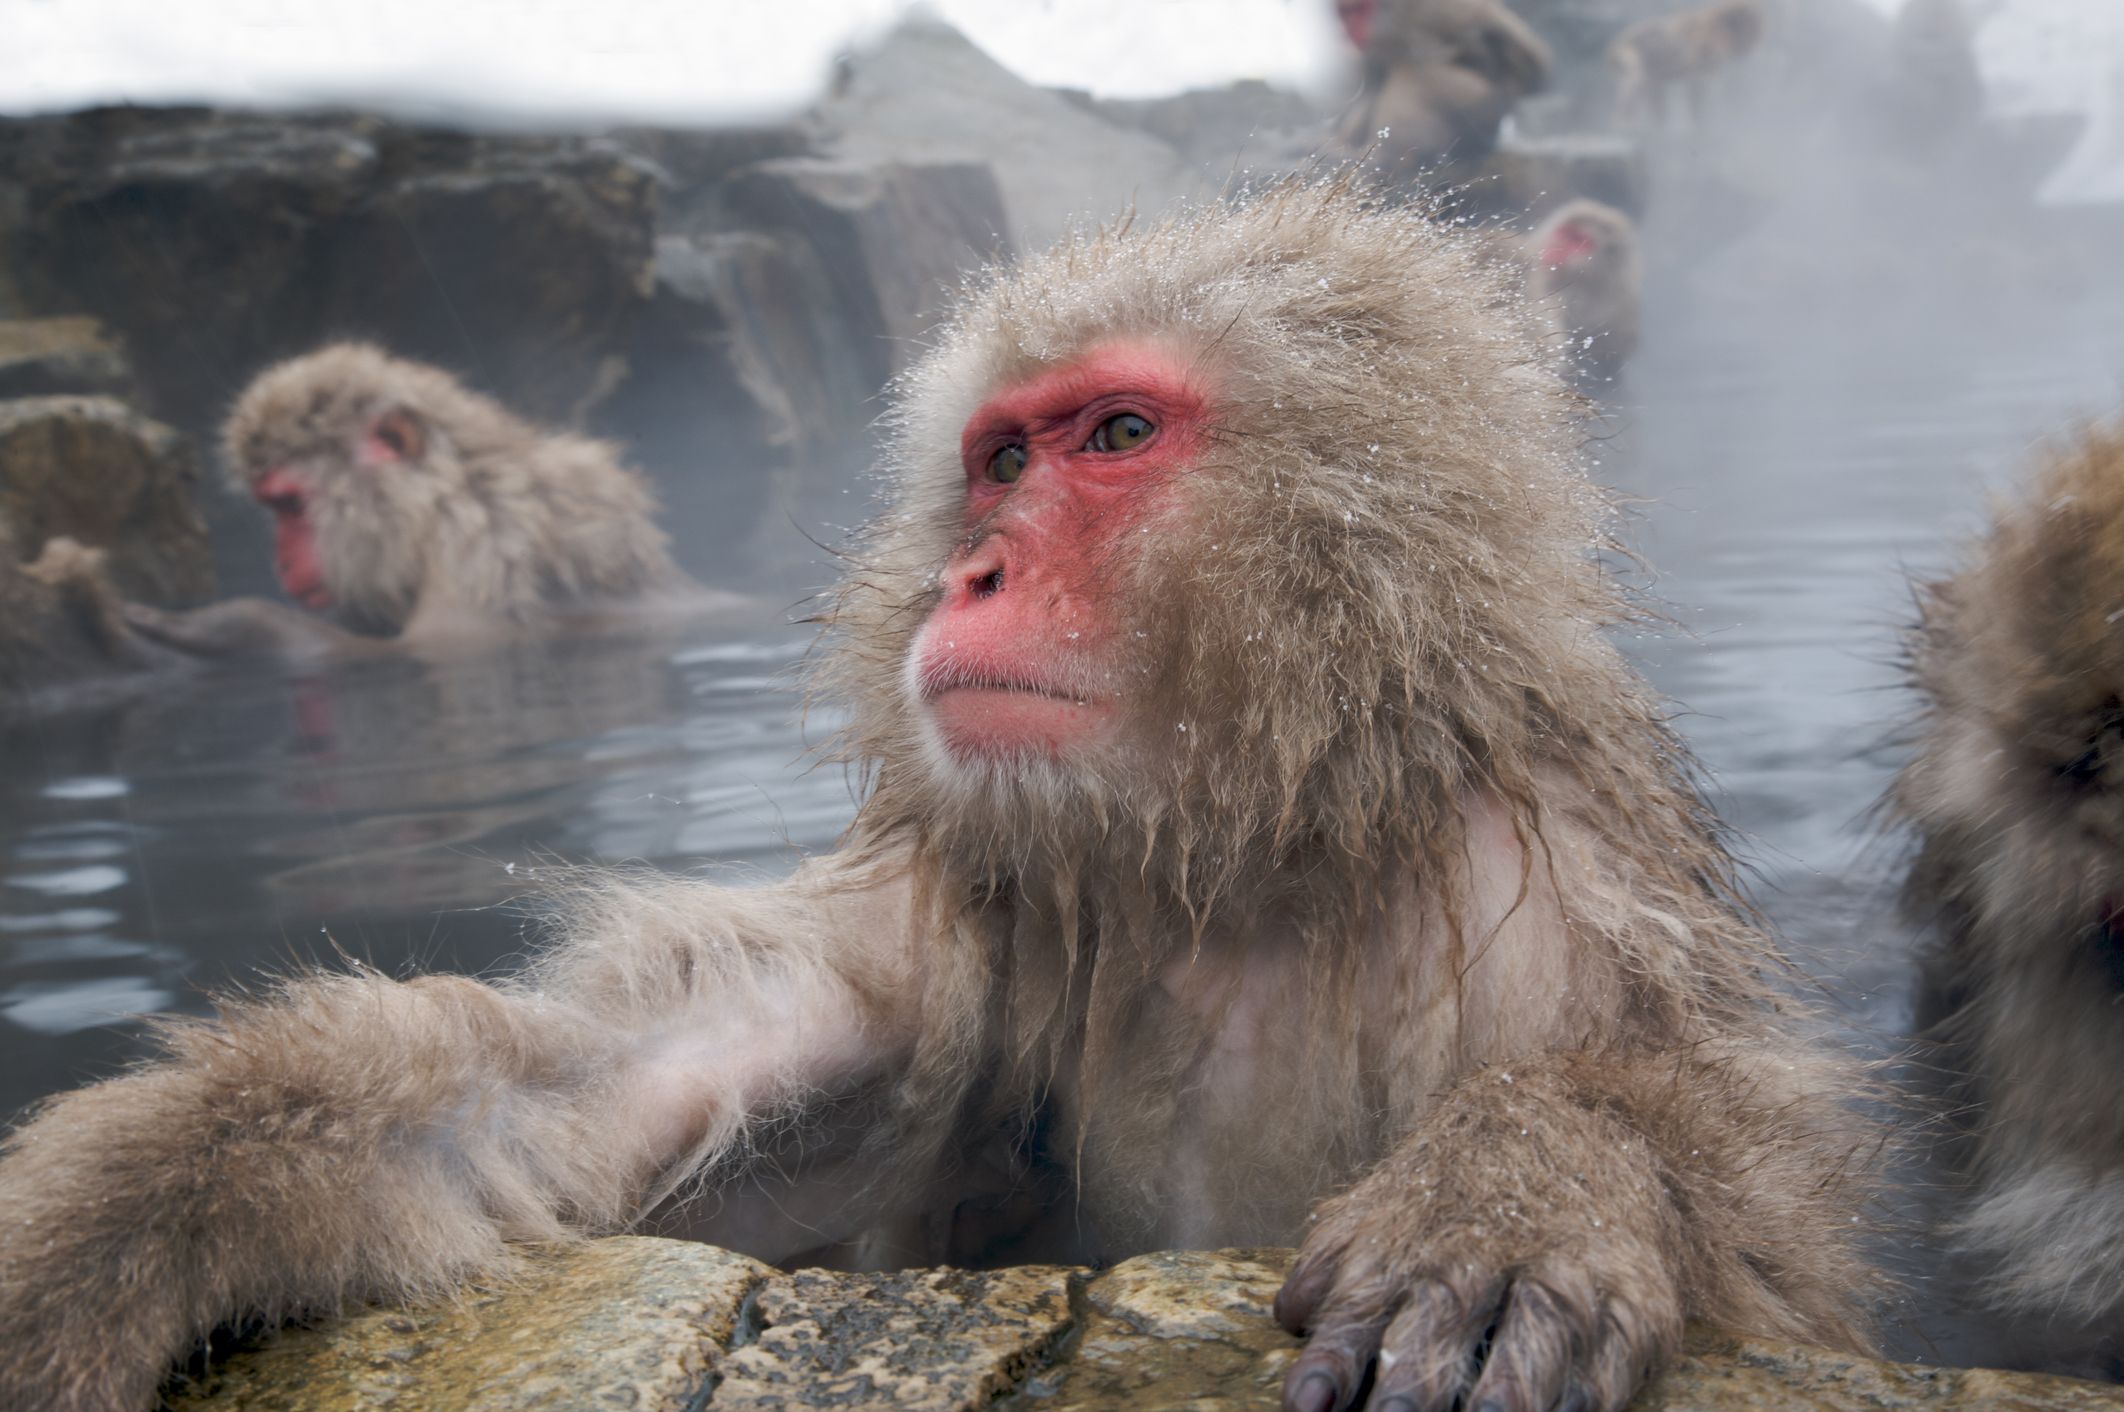 Snow Monkeys Love Hot Baths the Same Reasons Humans Do